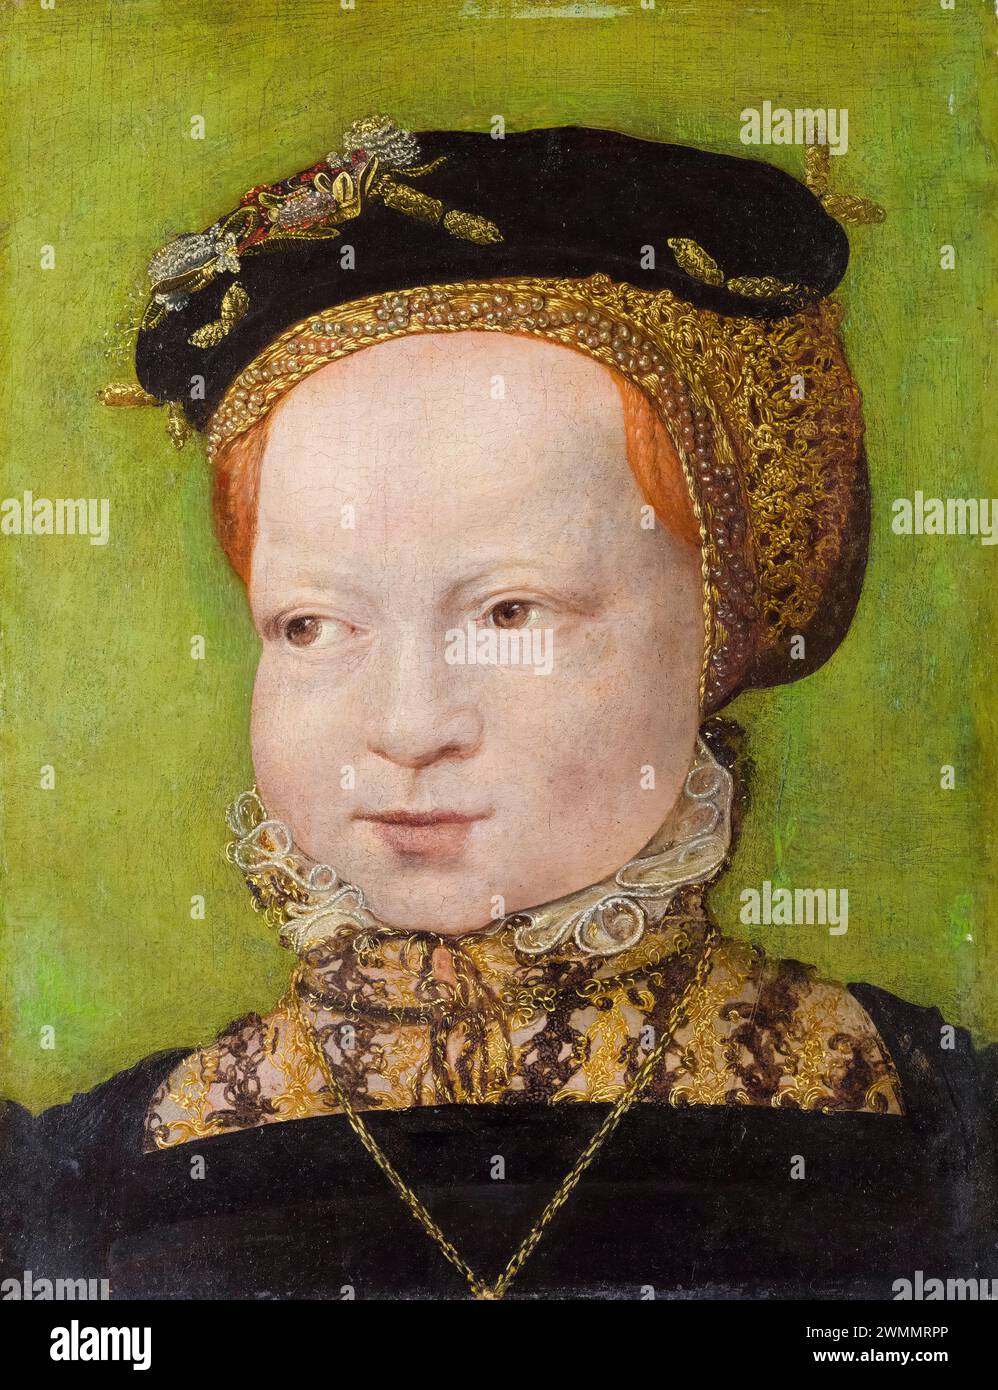 Jakob Seisenegger, Porträt eines Mädchens, Gemälde in Öl auf Holz, 1545-1550 Stockfoto